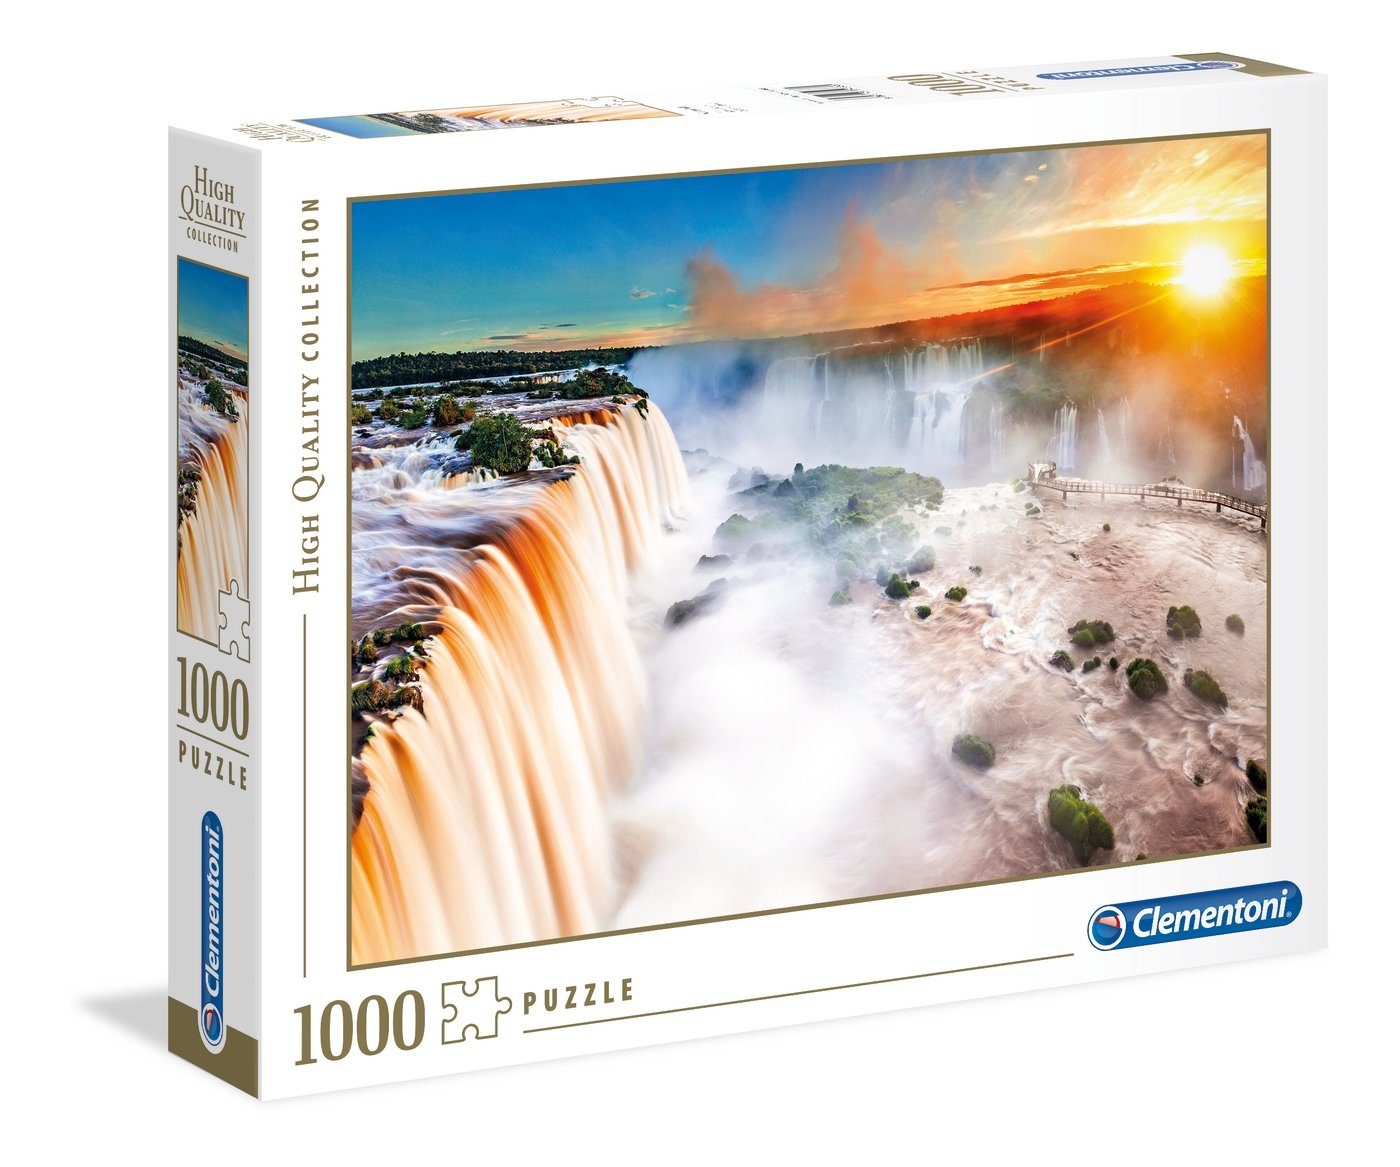 Puzzle 1000 Puzzleteile Teile Clementoni 1000 Puzzle, 39385 Wasserfall Clementoni®